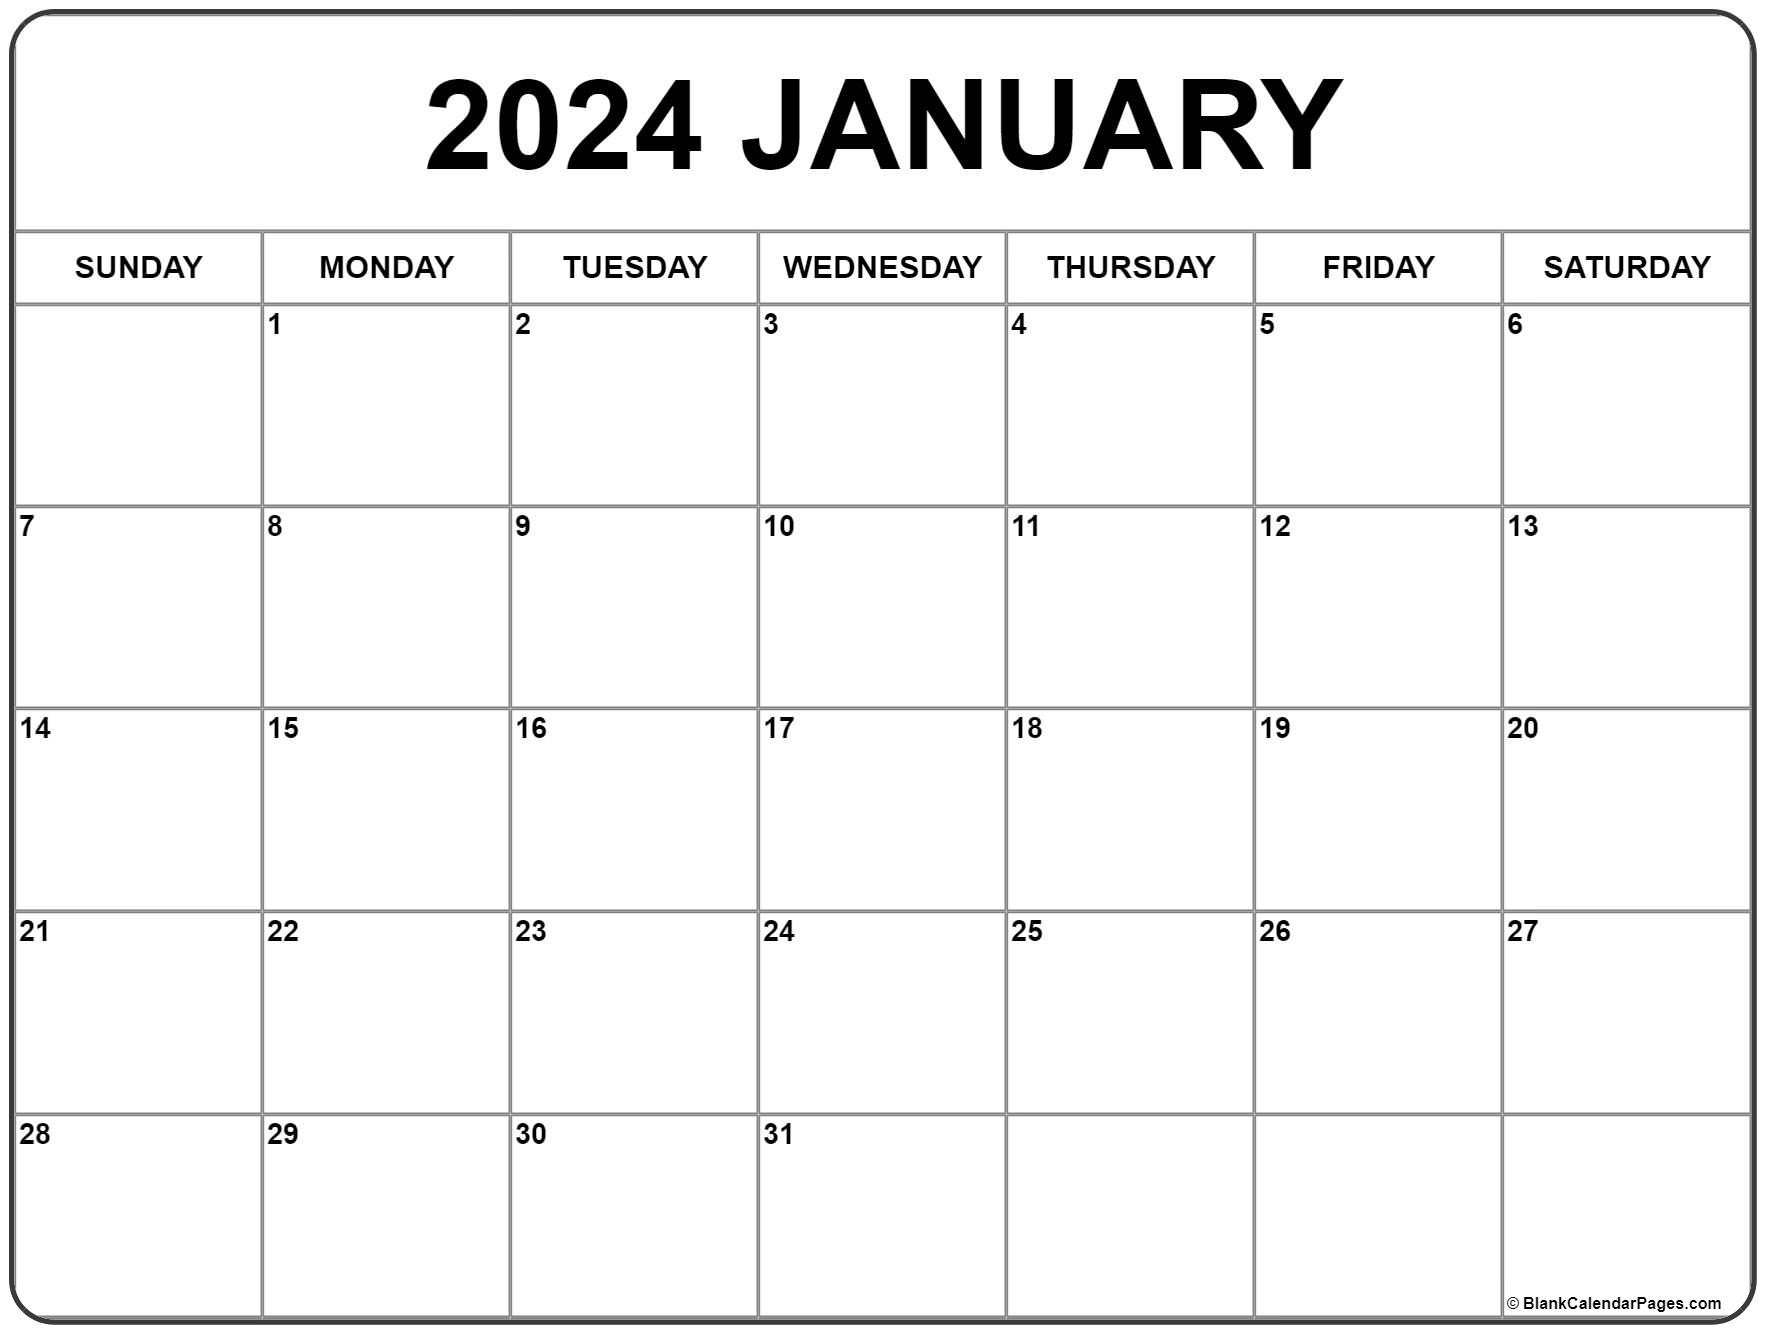 January 2024 Calendar | Free Printable Calendar | January 2024 Calendar Month